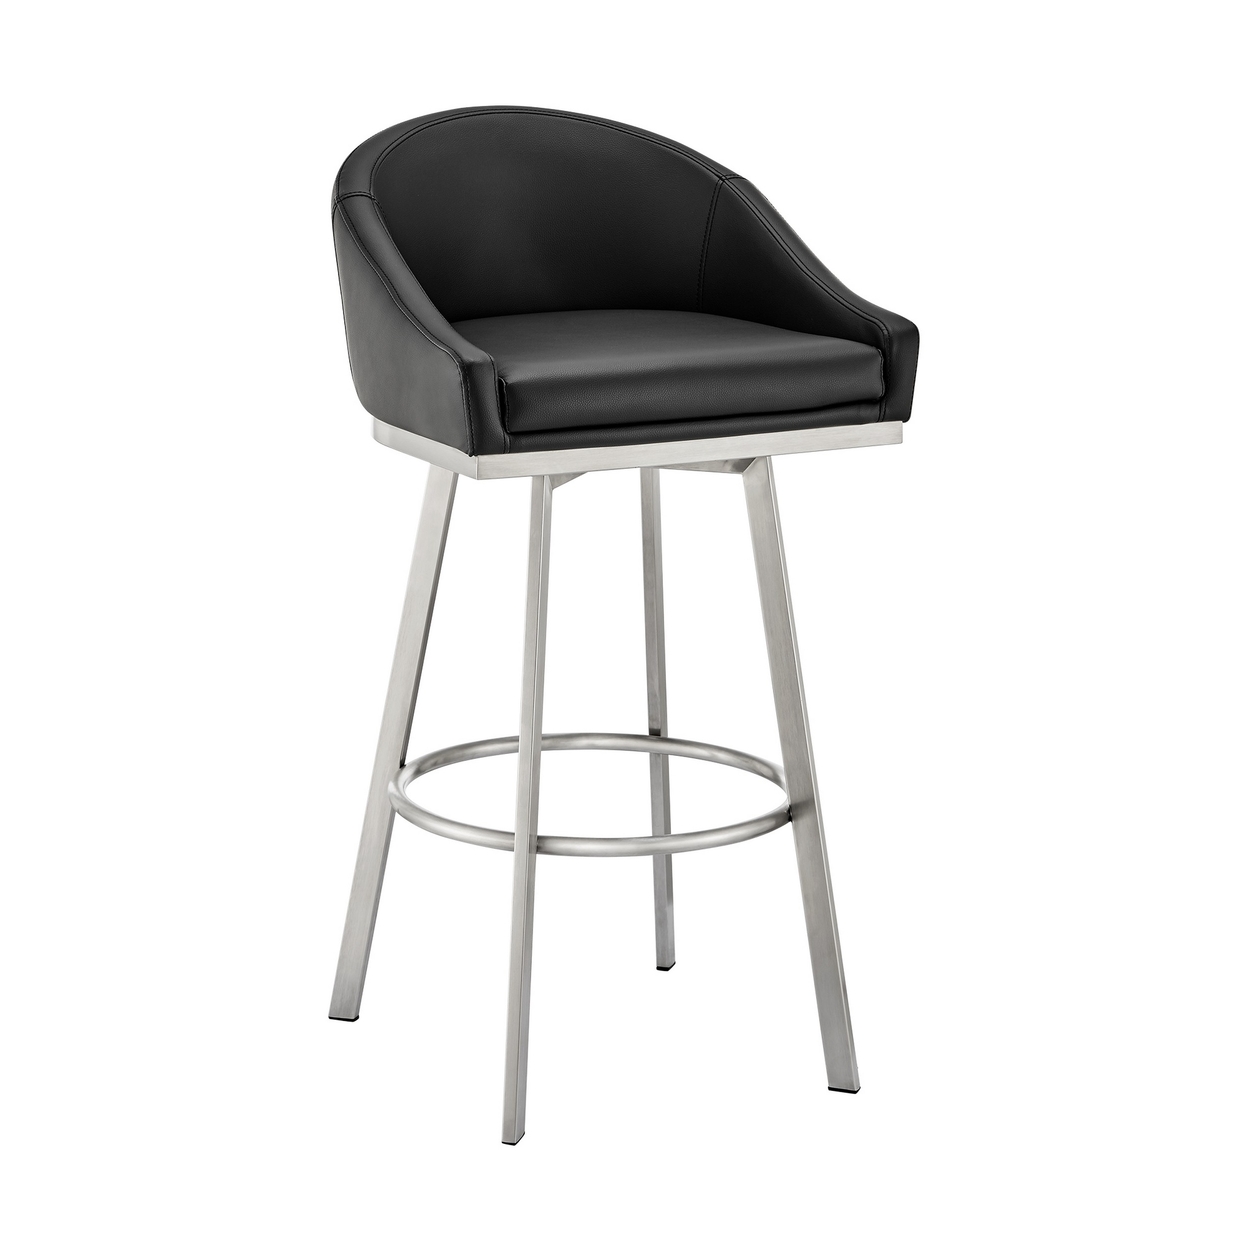 Sheryl 30 Inch Swivel Bar Stool Chair, Low Back, Black Faux Leather- Saltoro Sherpi